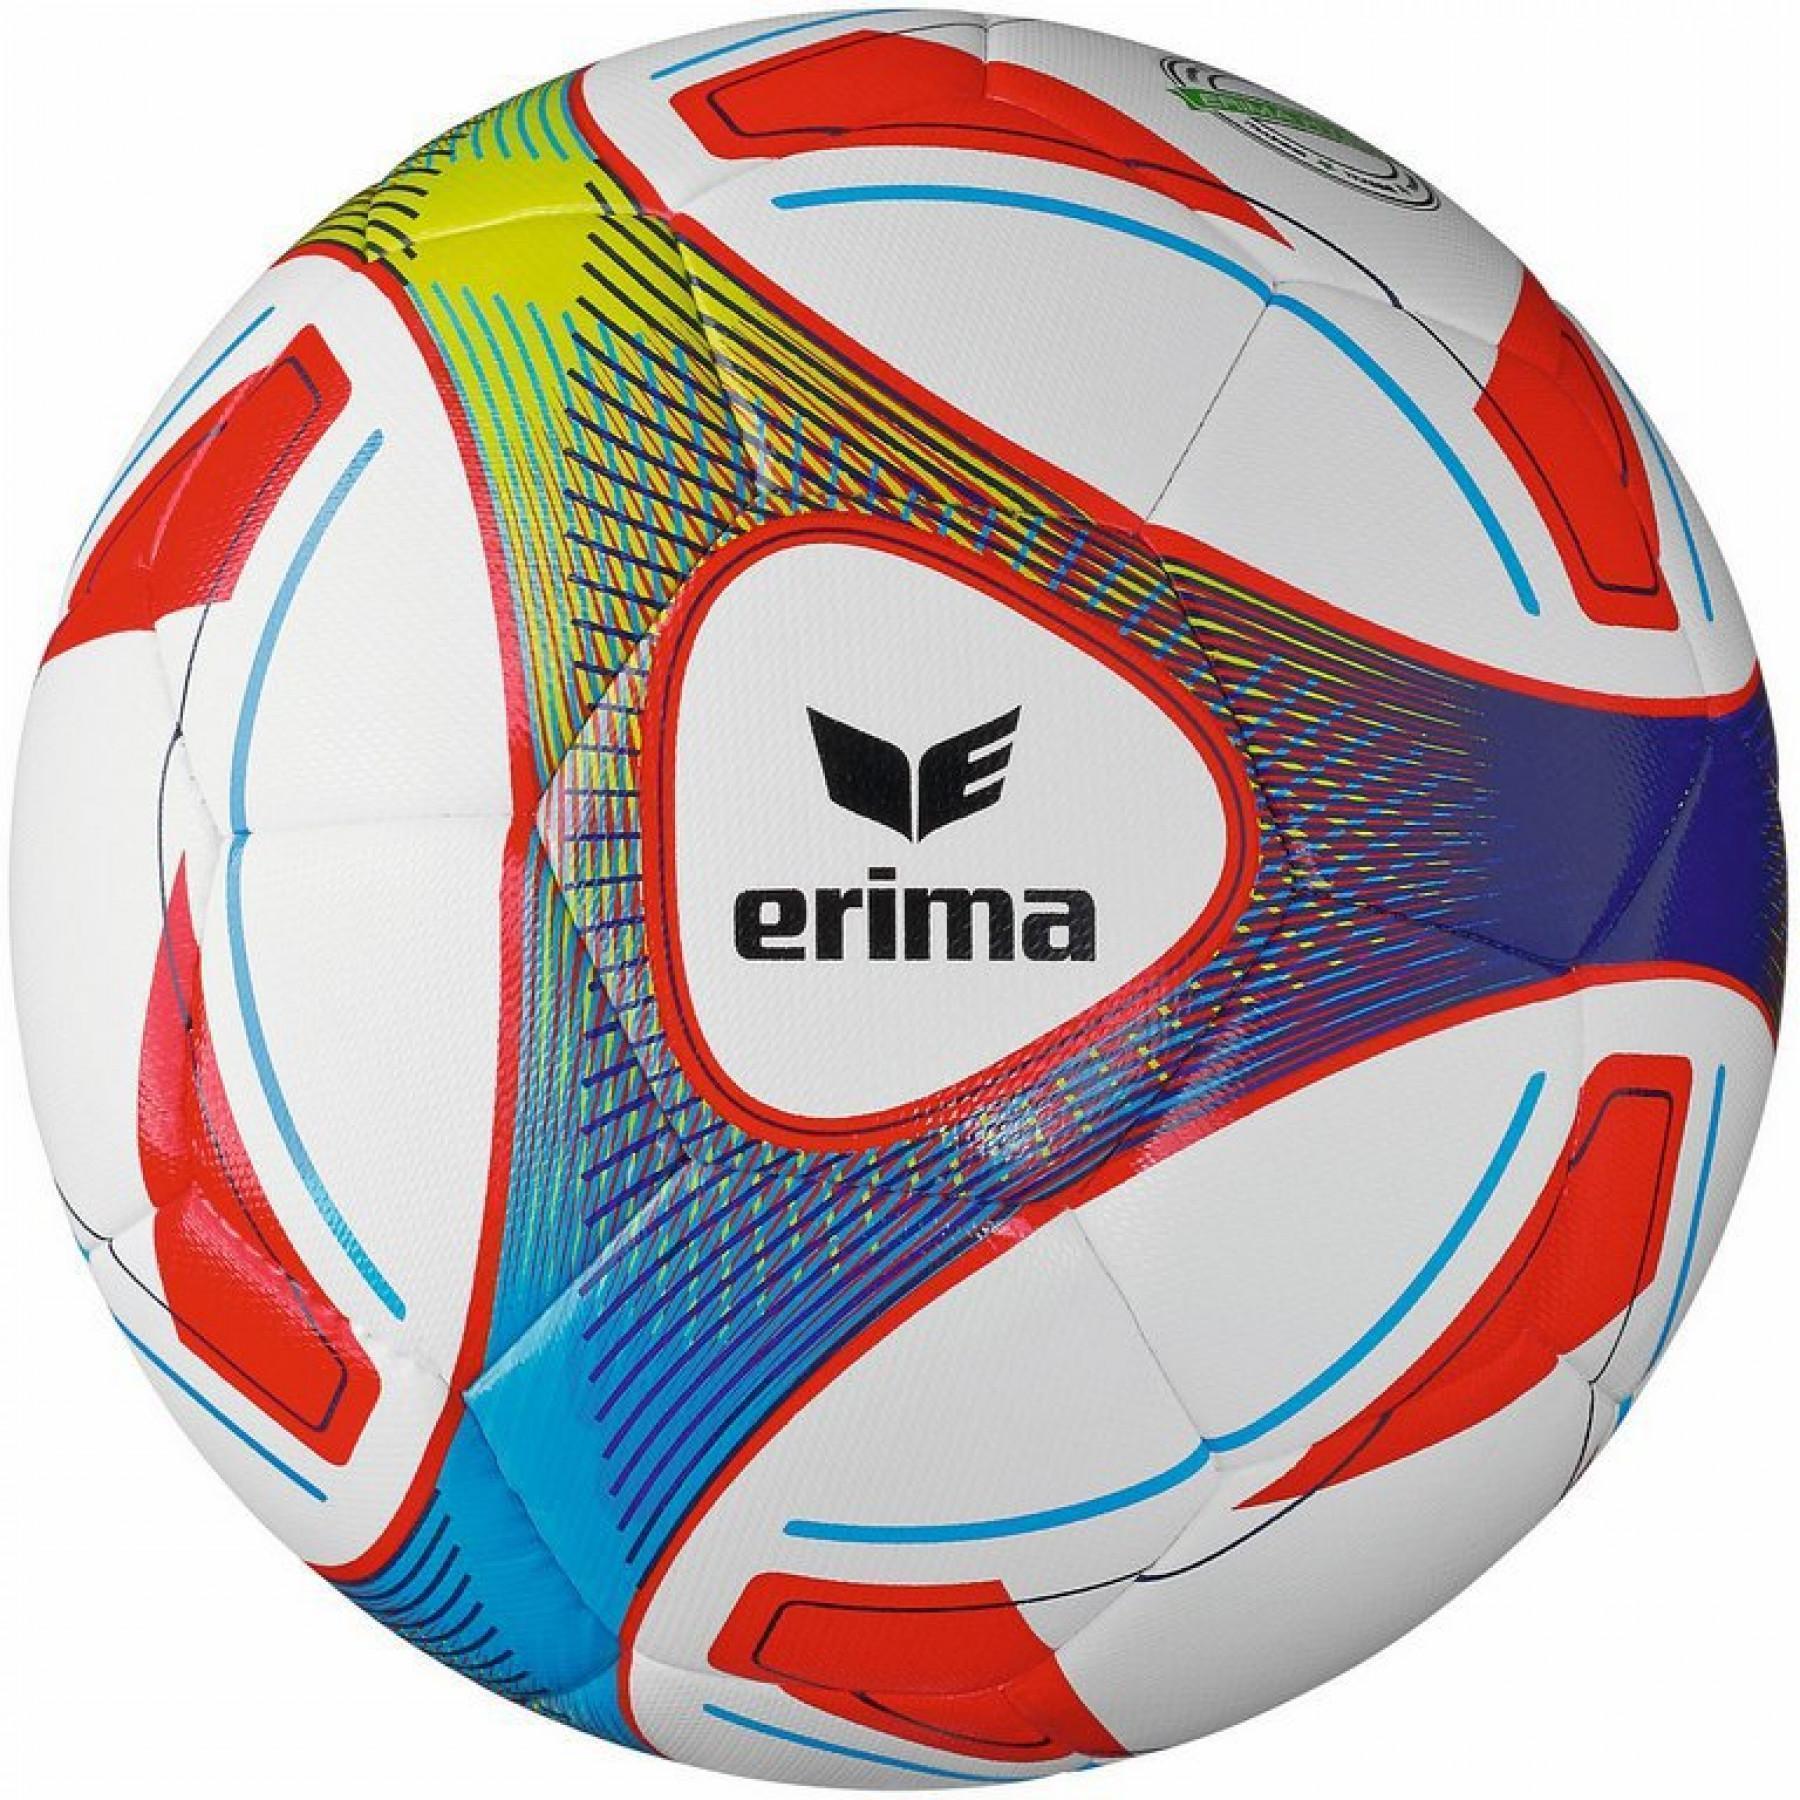 Erima Hybrid Training Balls